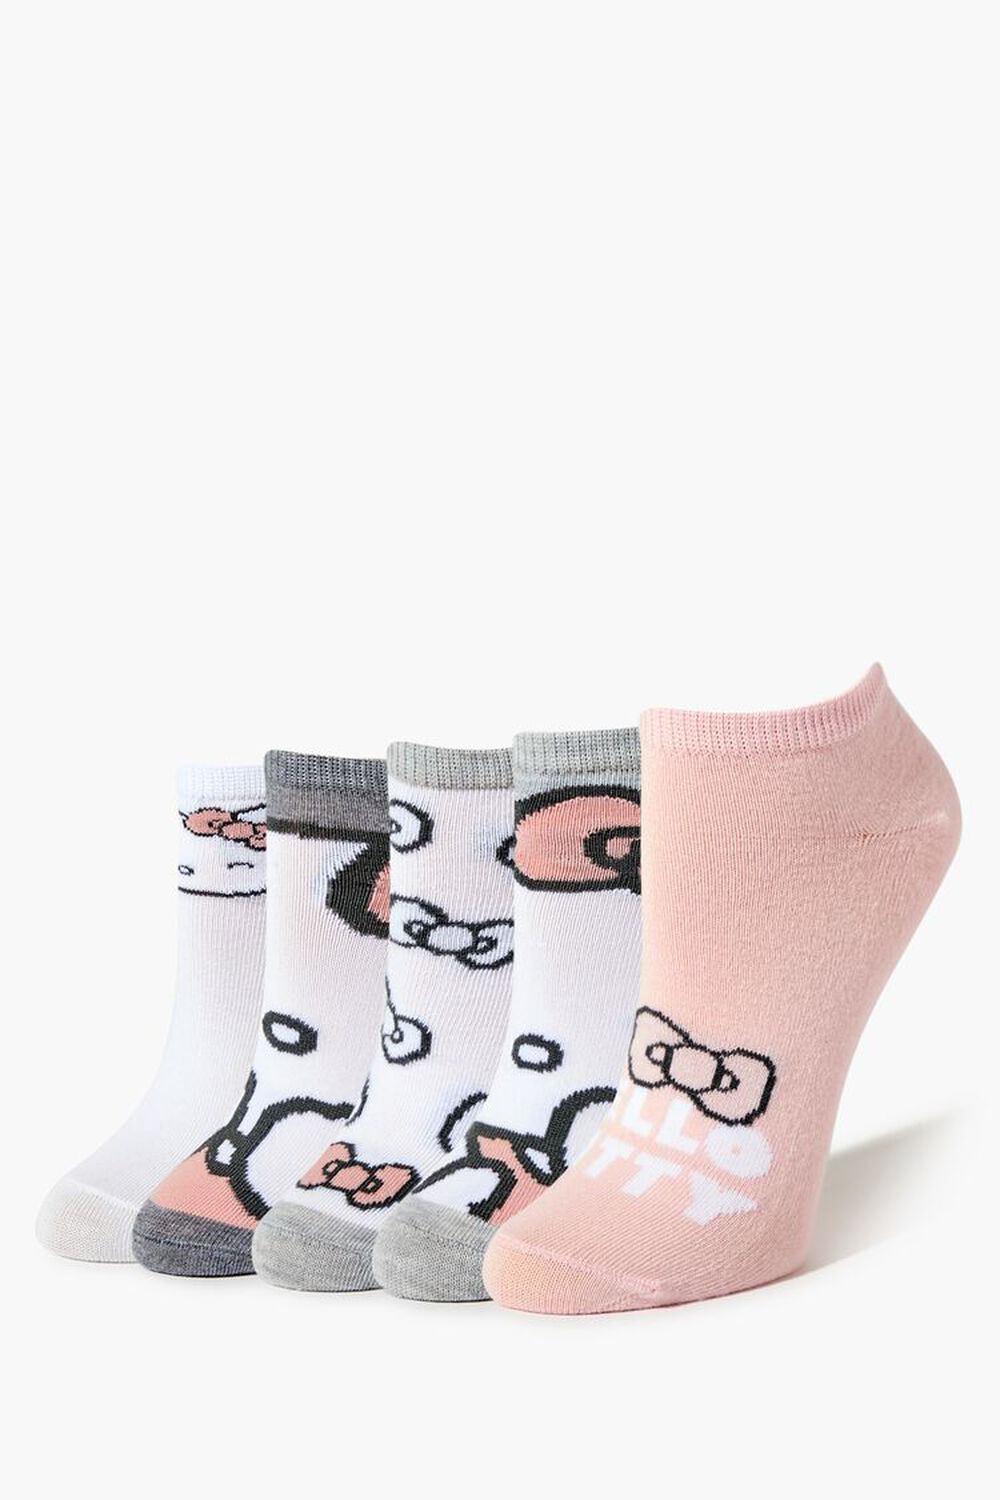 WHITE/MULTI Hello Kitty Ankle Sock Set - 5 pack, image 1